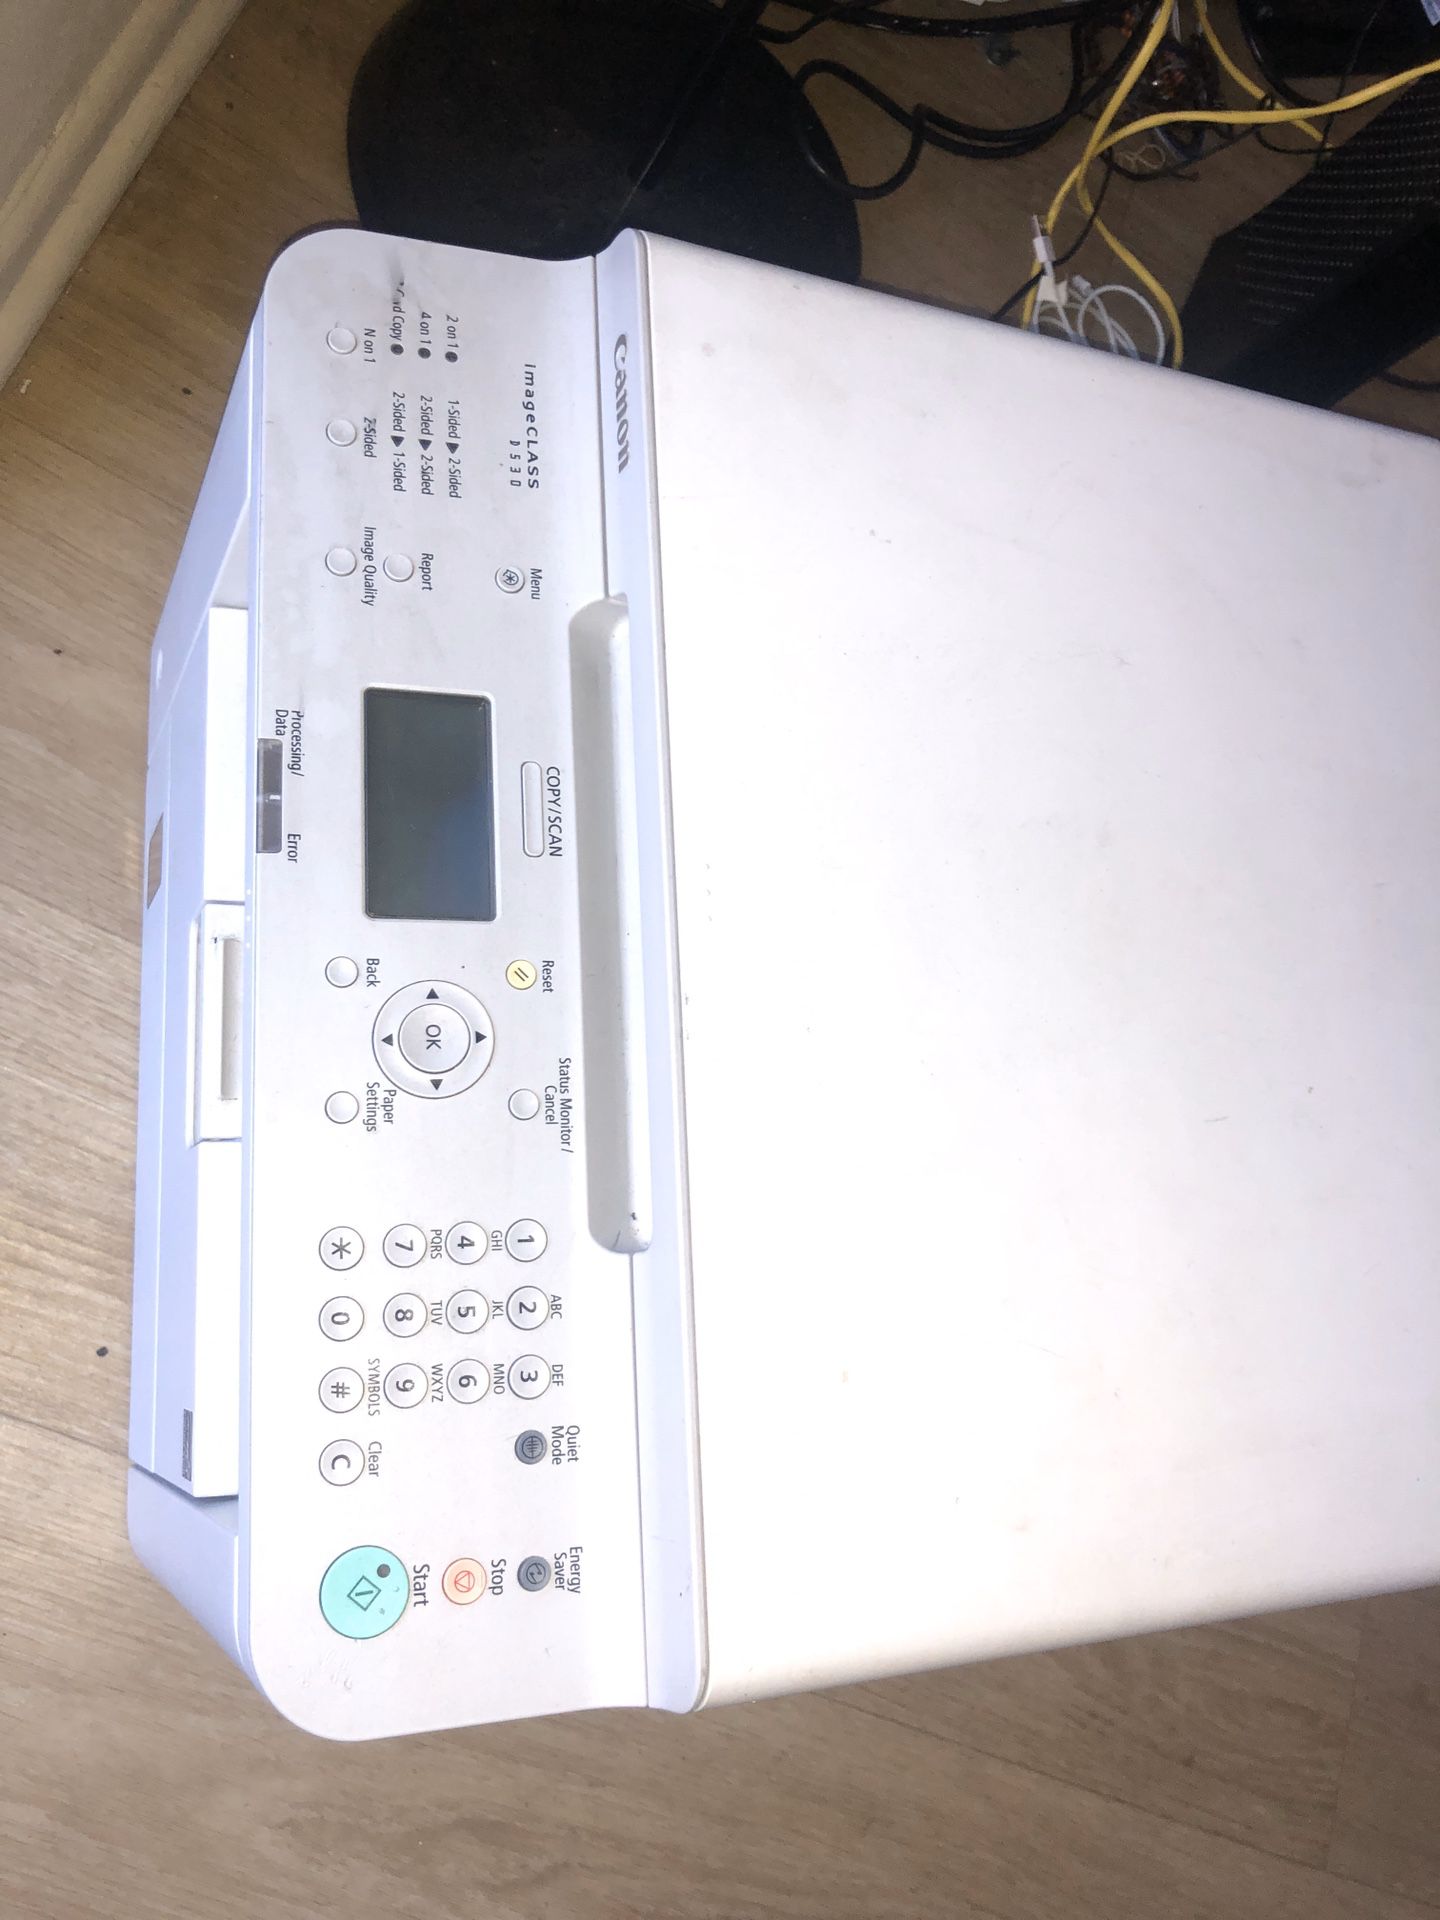 B/W Printer scanner fax machine